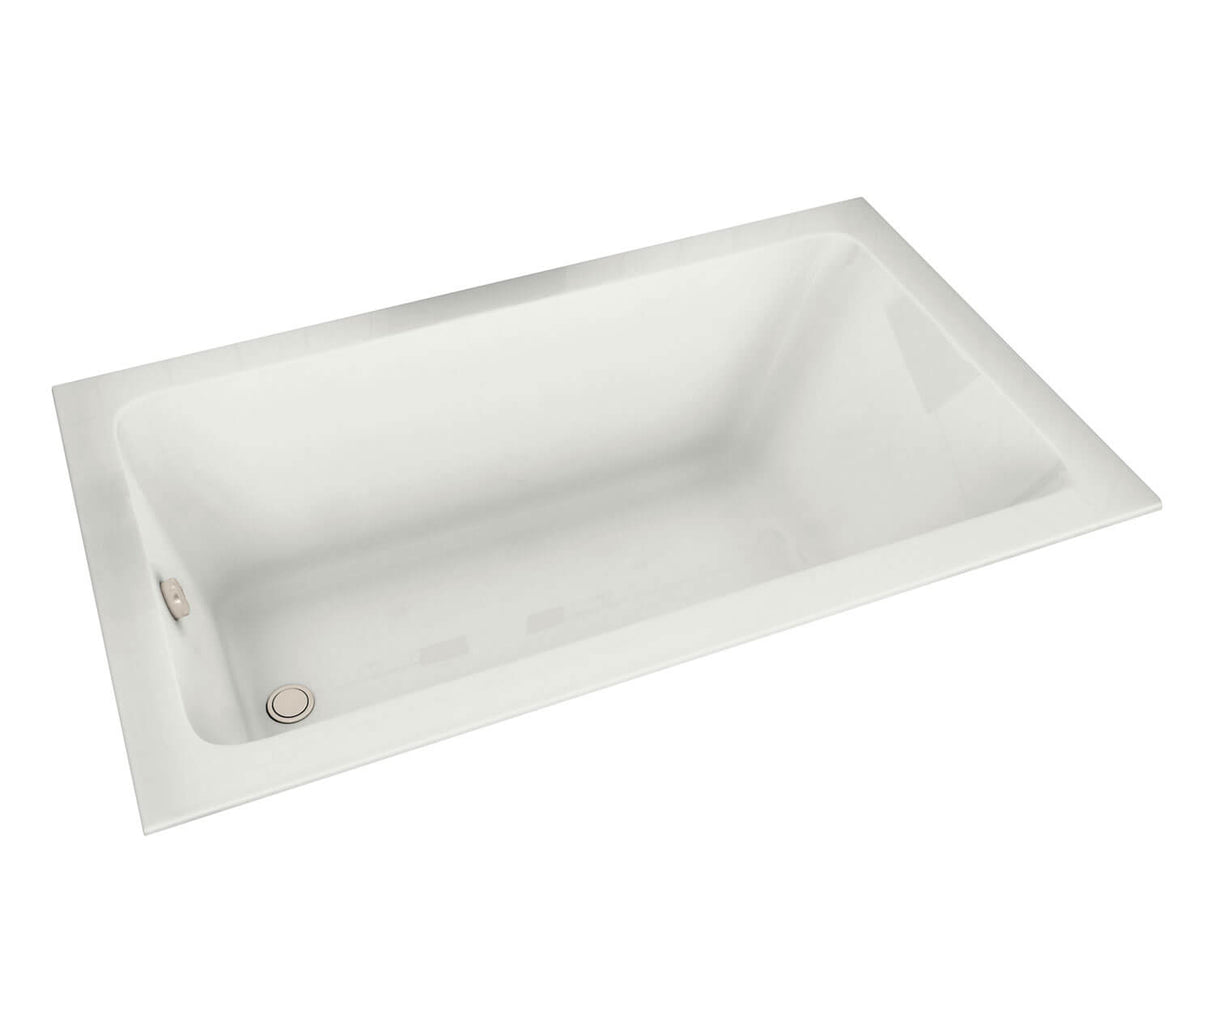 MAAX 101457-000-001-100 Pose 6032 Acrylic Drop-in End Drain Bathtub in White